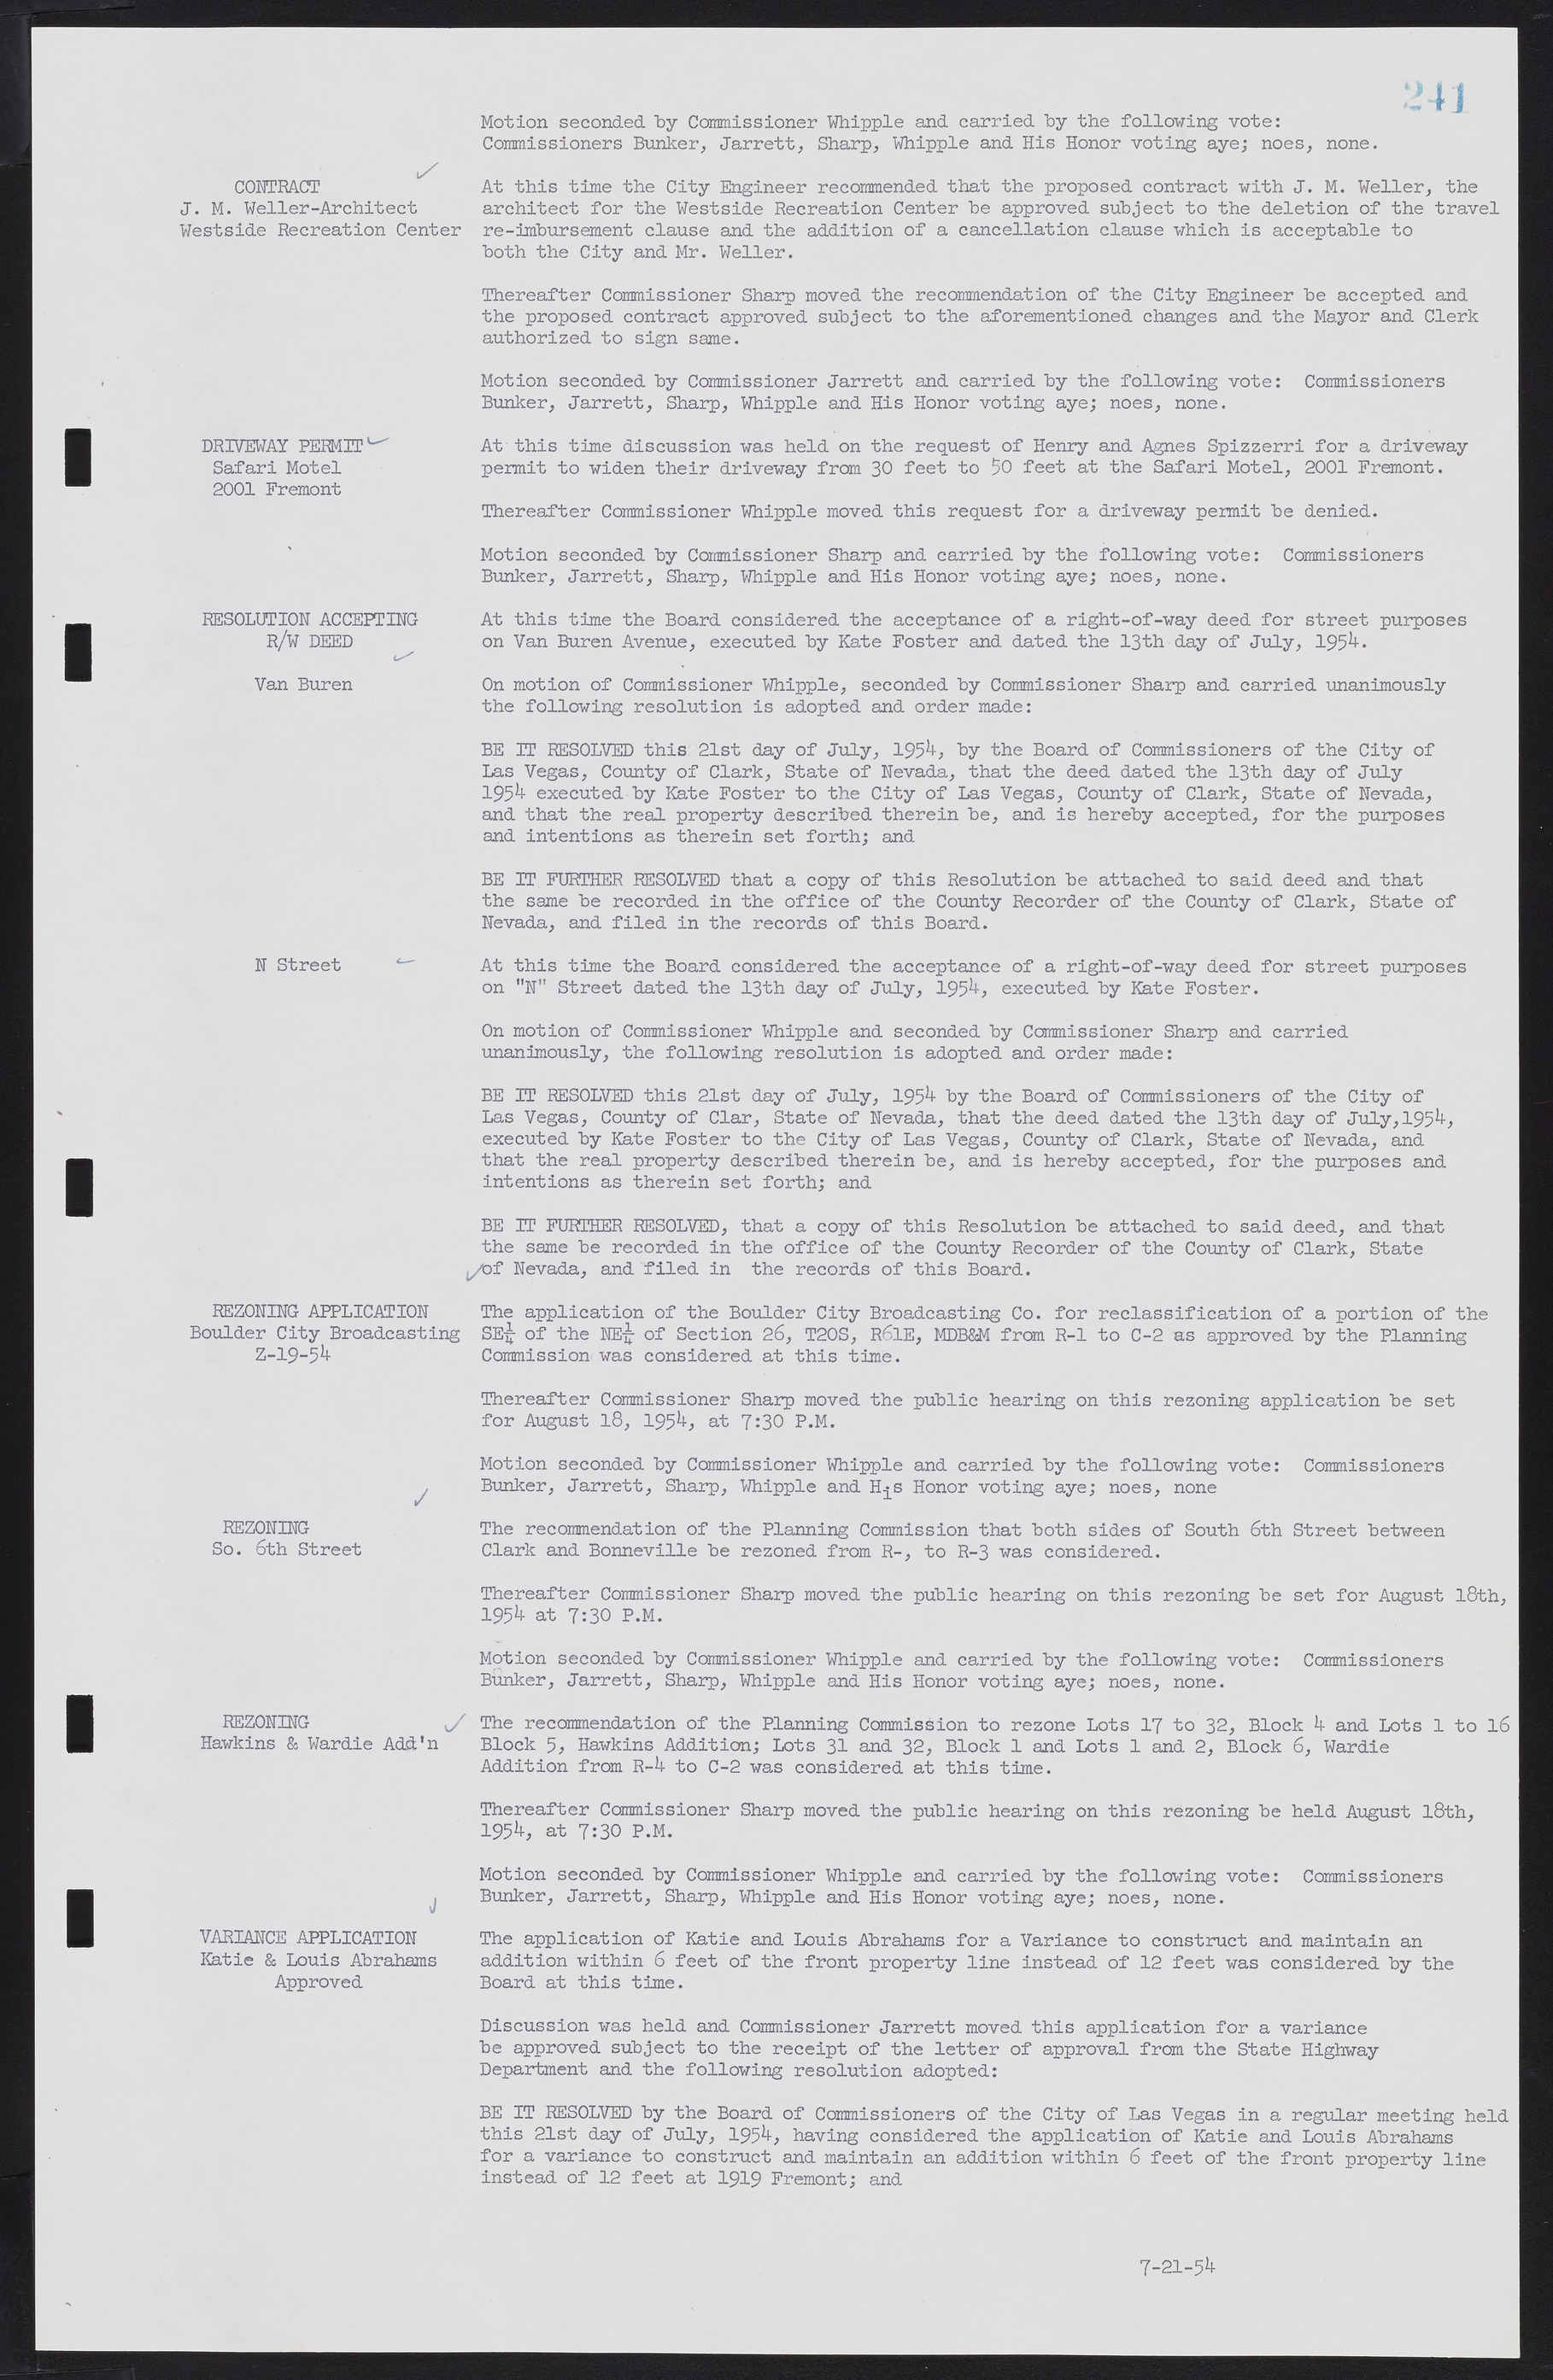 Las Vegas City Commission Minutes, February 17, 1954 to September 21, 1955, lvc000009-247